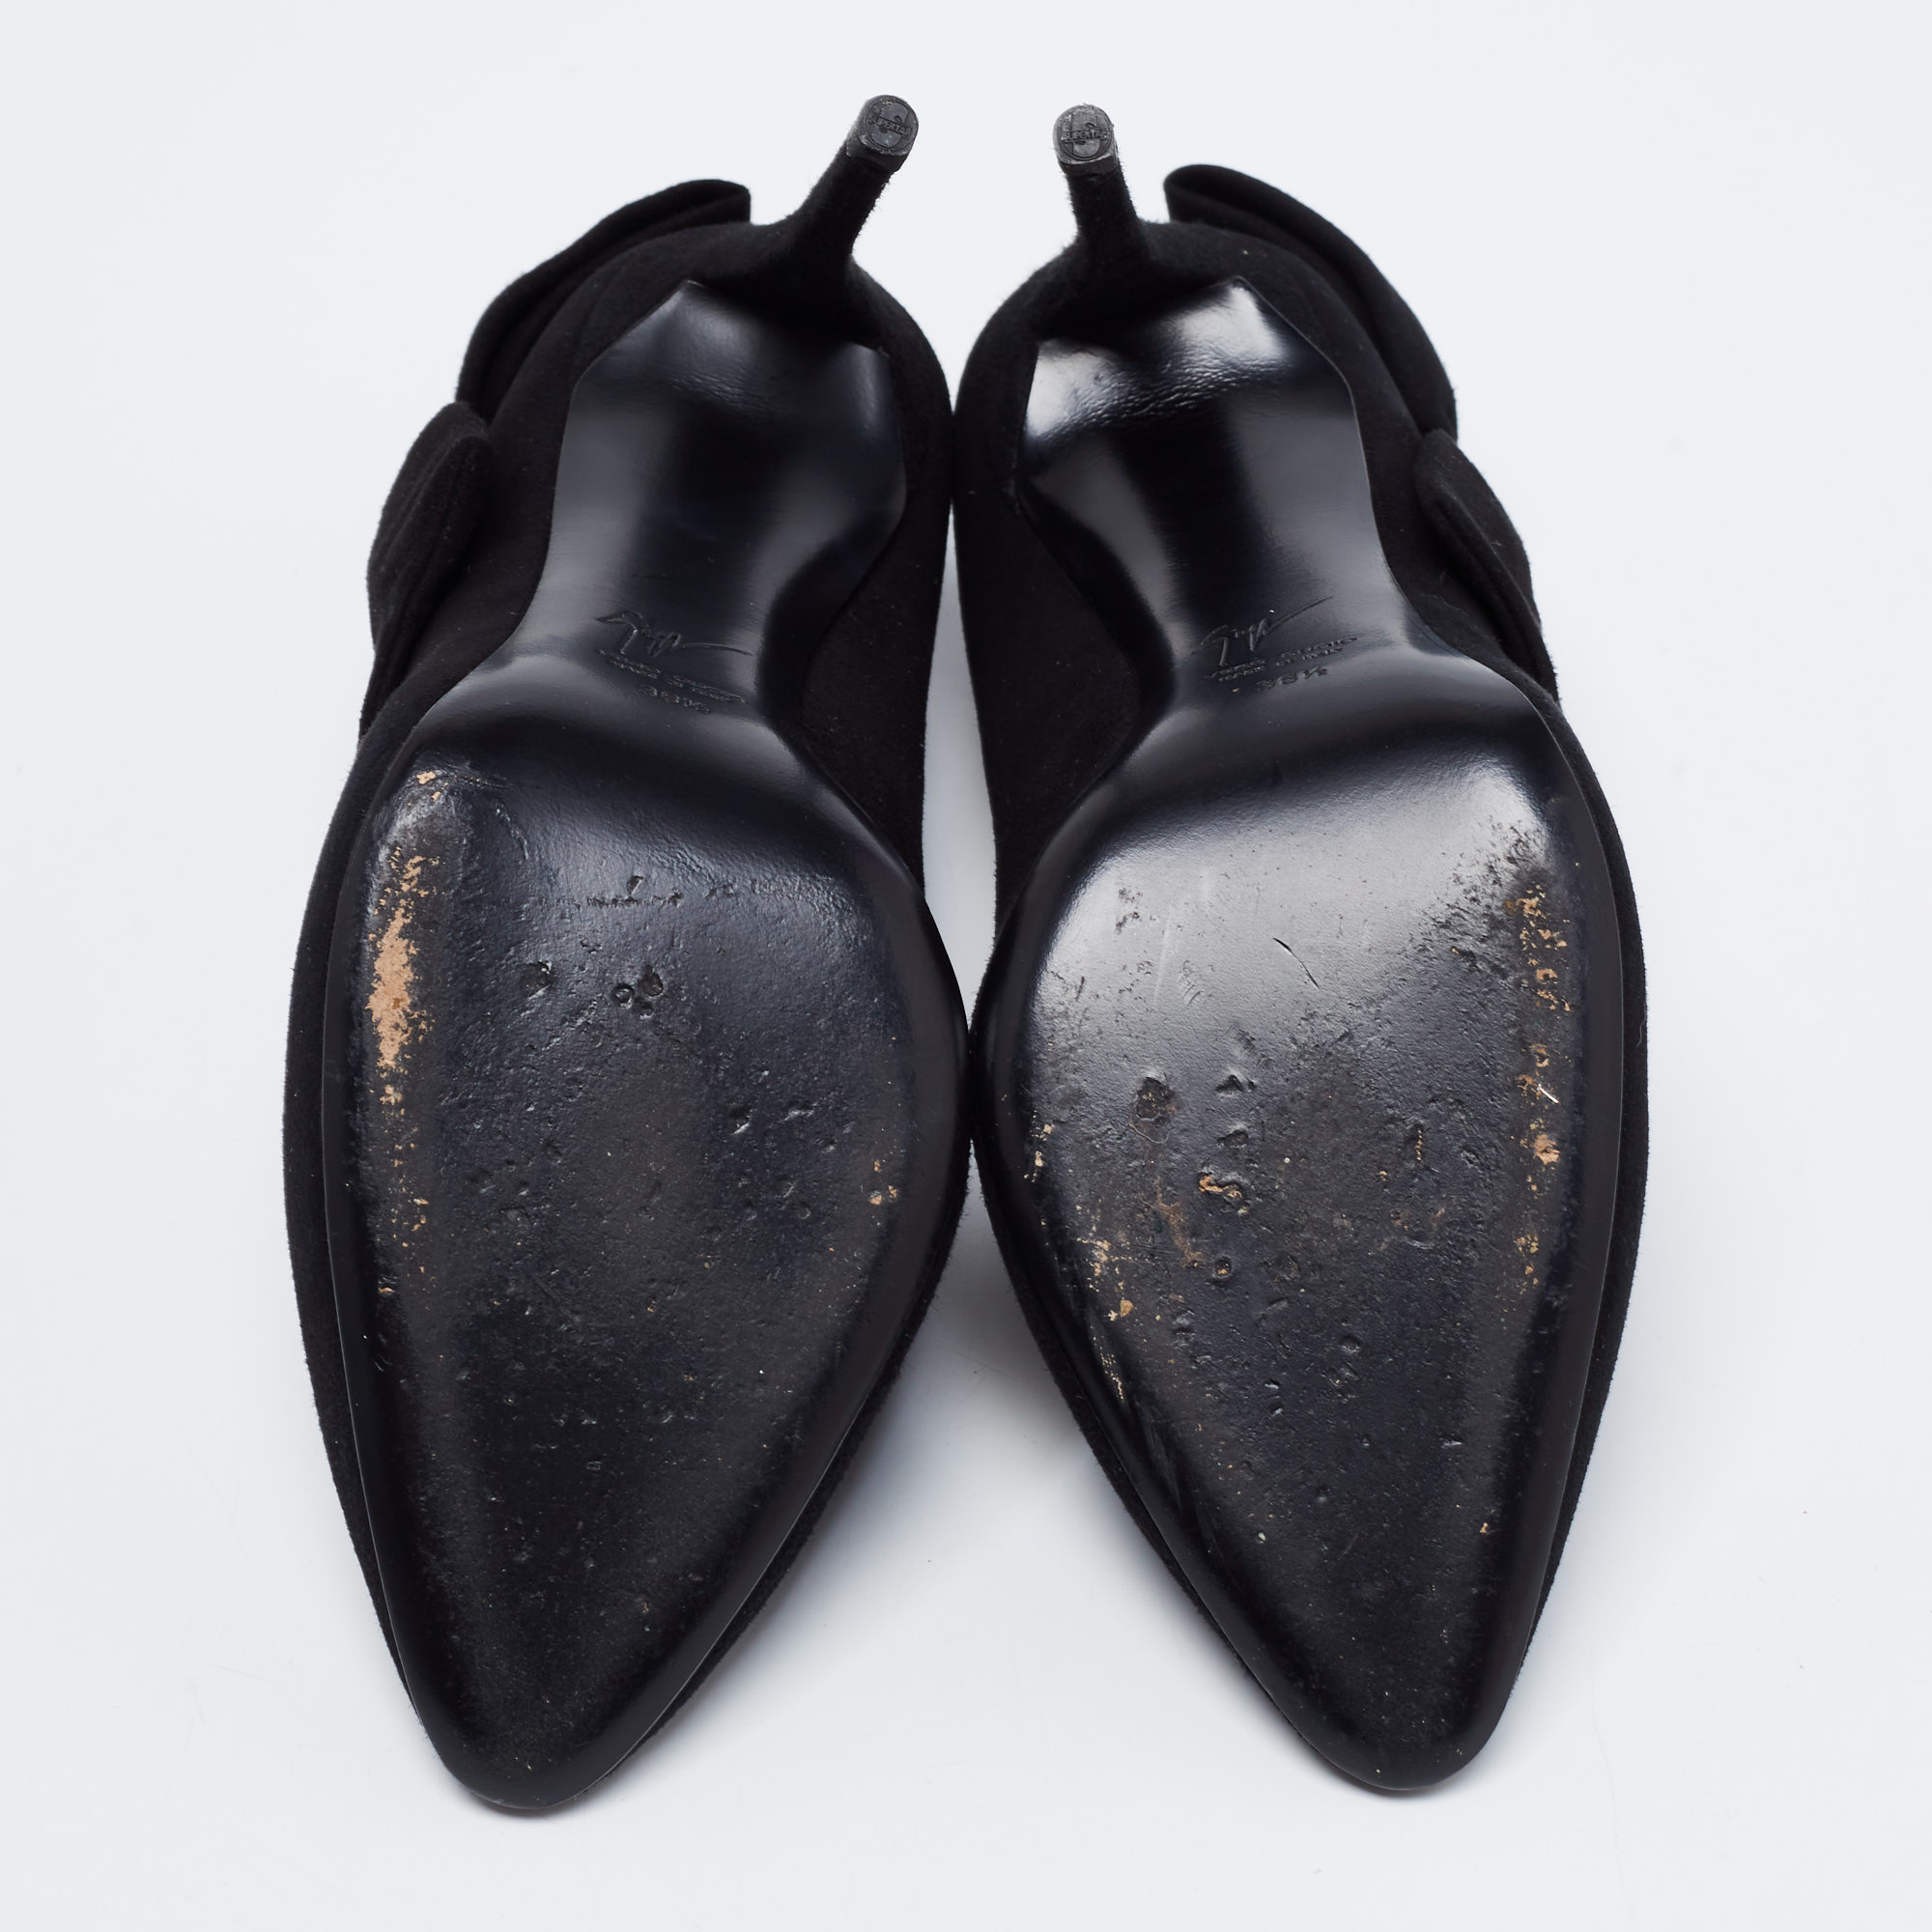 Giuseppe Zanotti Black Suede Bow Detail Pumps Size 38.5